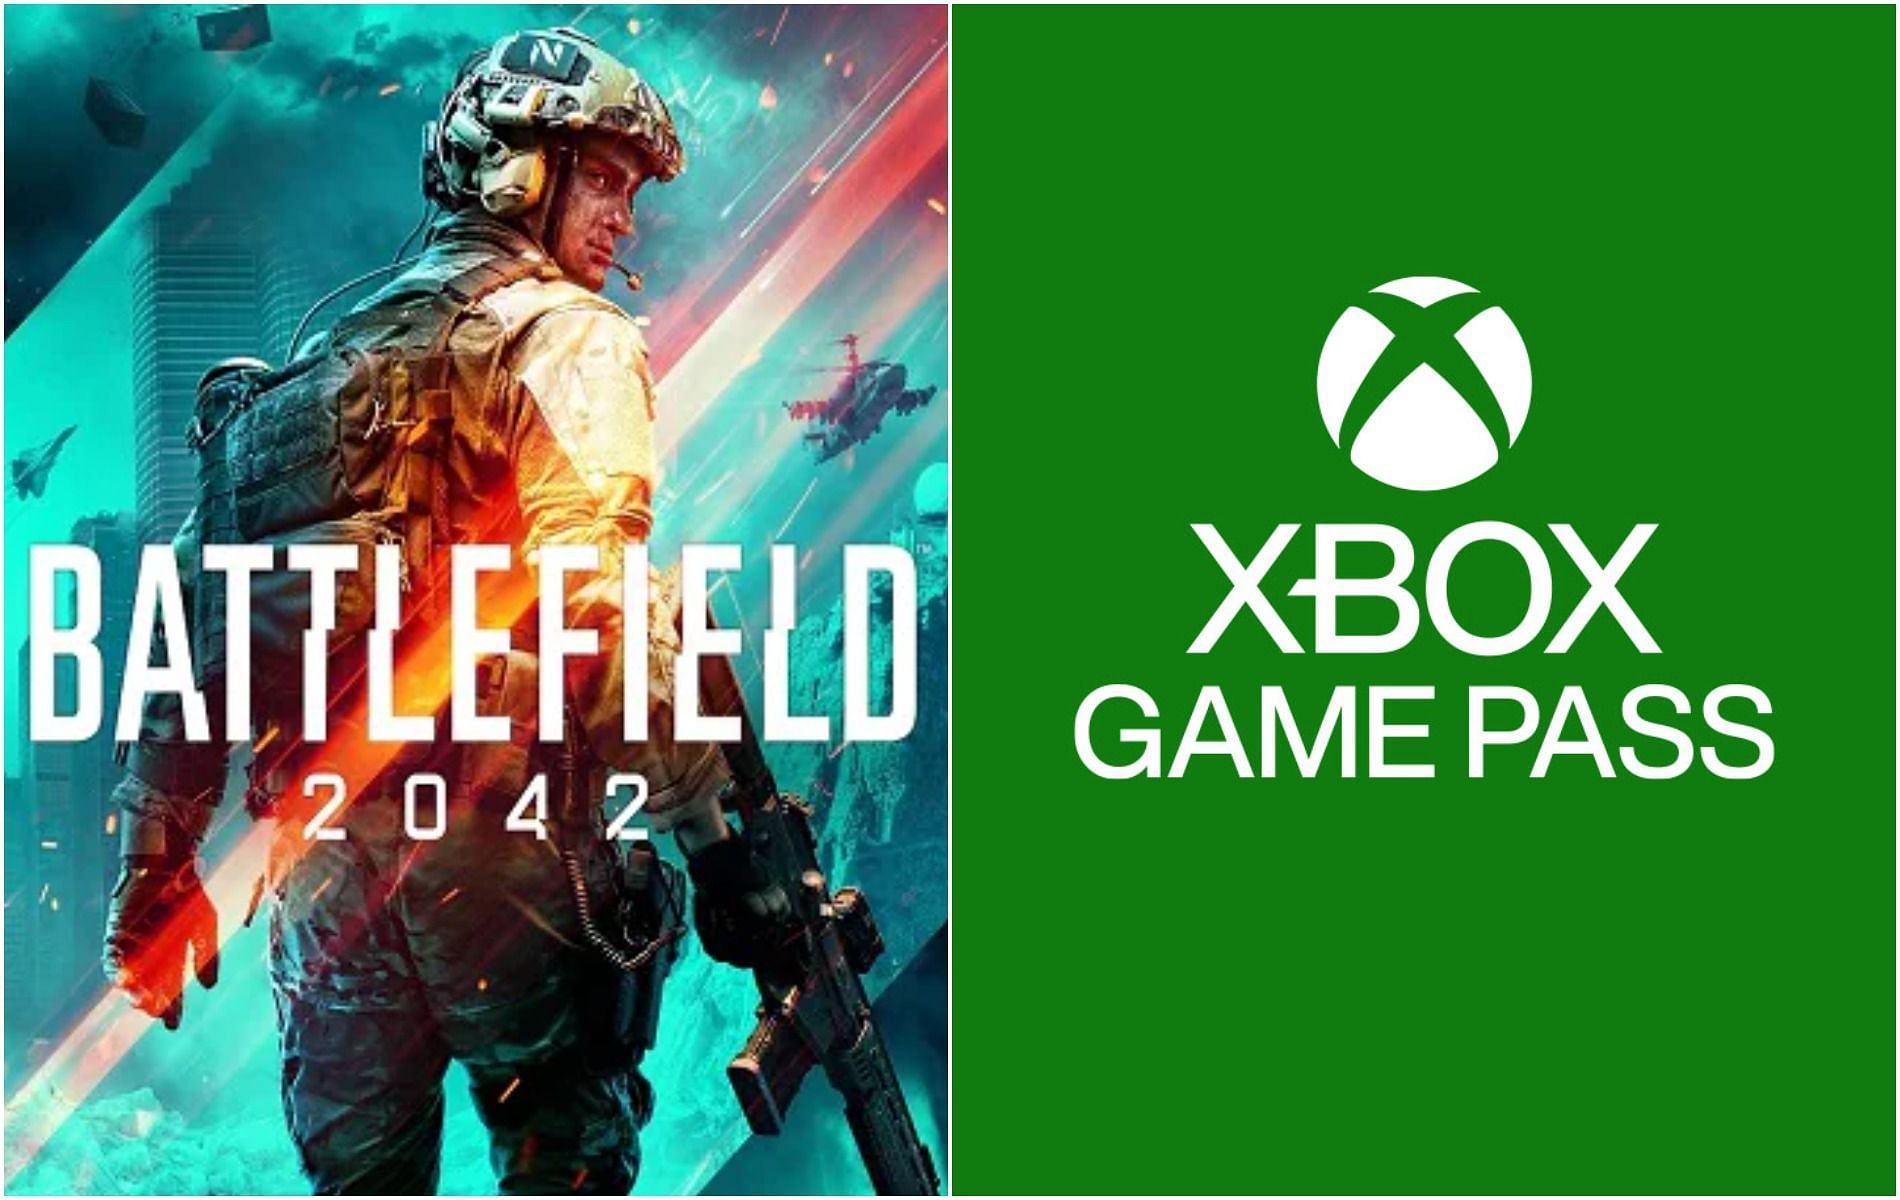 Battlefield 2042 will come to Xbox Game Pass (Image via Sportskeeda)